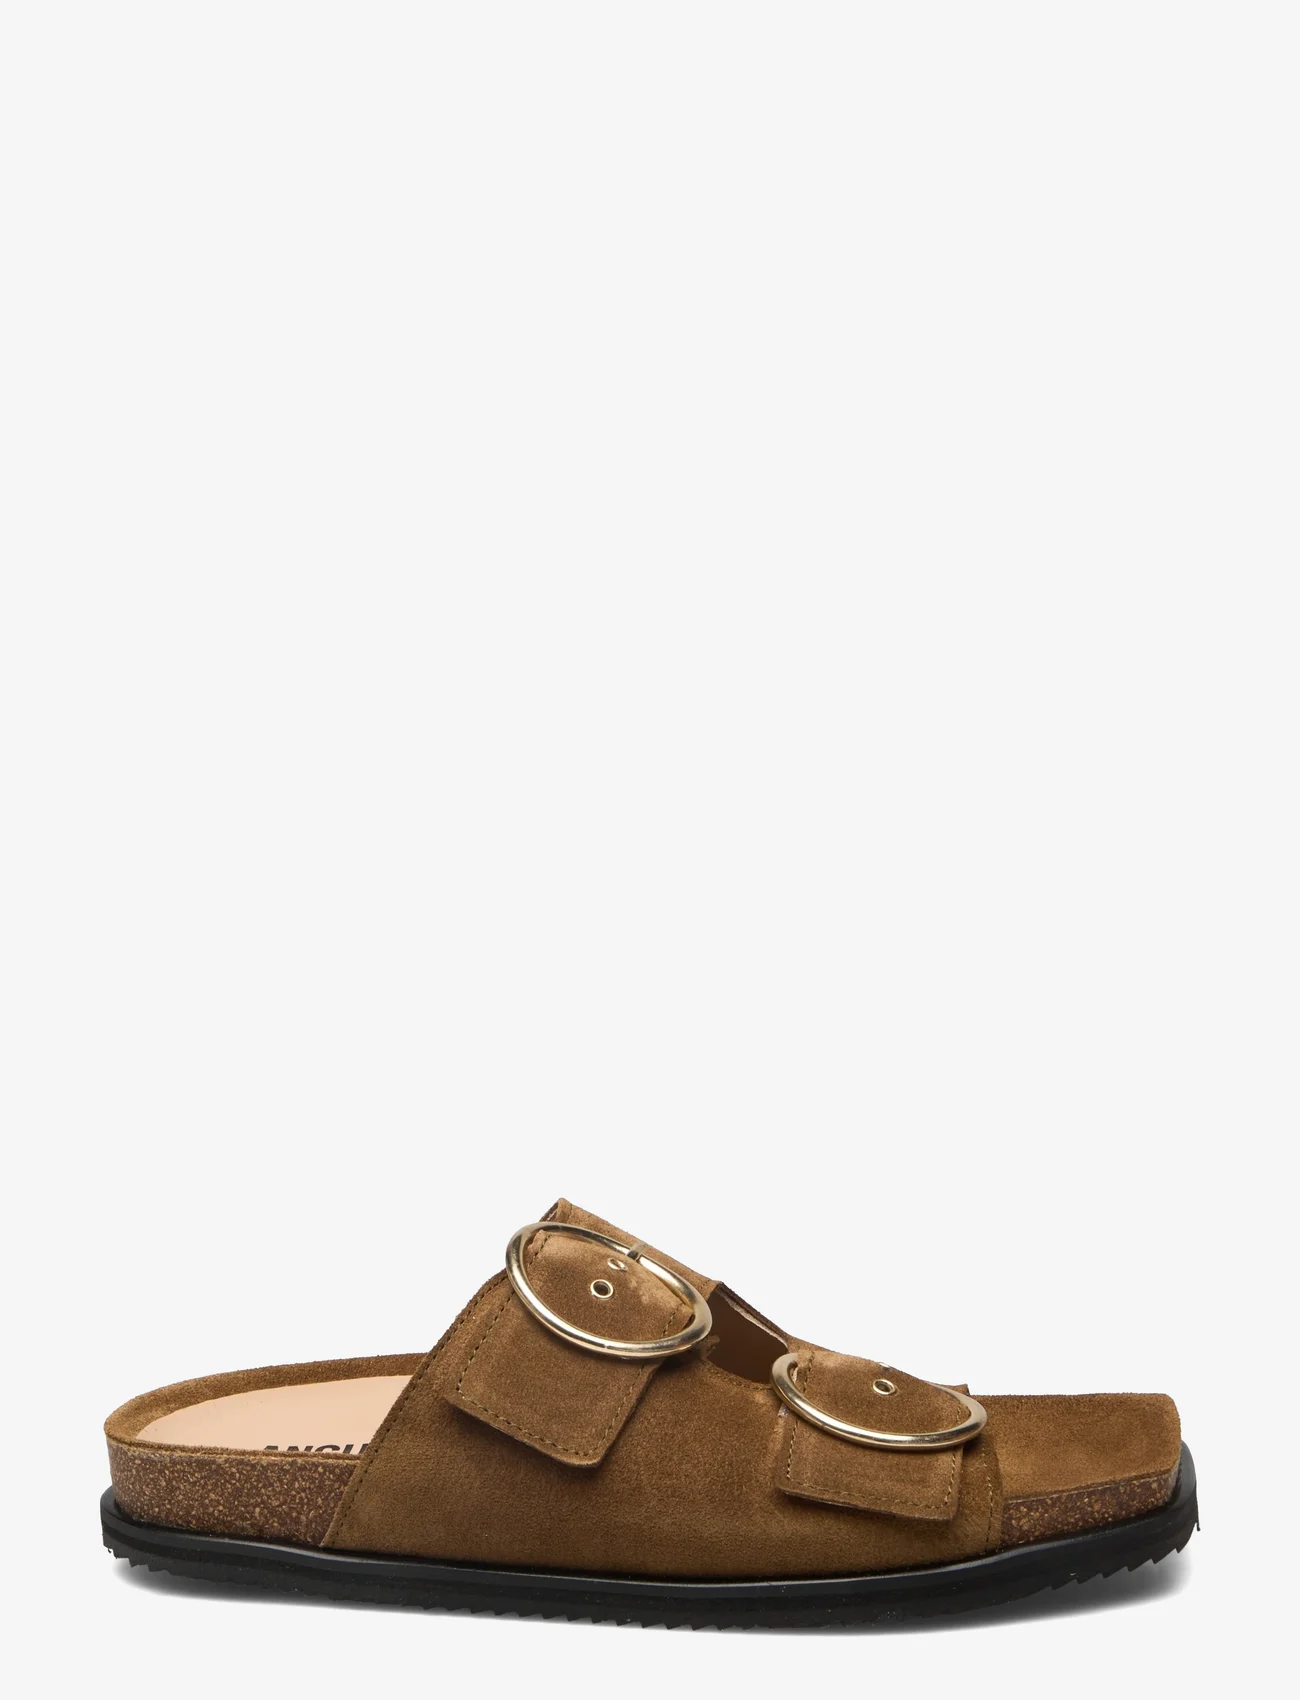 ANGULUS - Sandals - flat - open toe - op - flate sandaler - 2209 mustard - 1